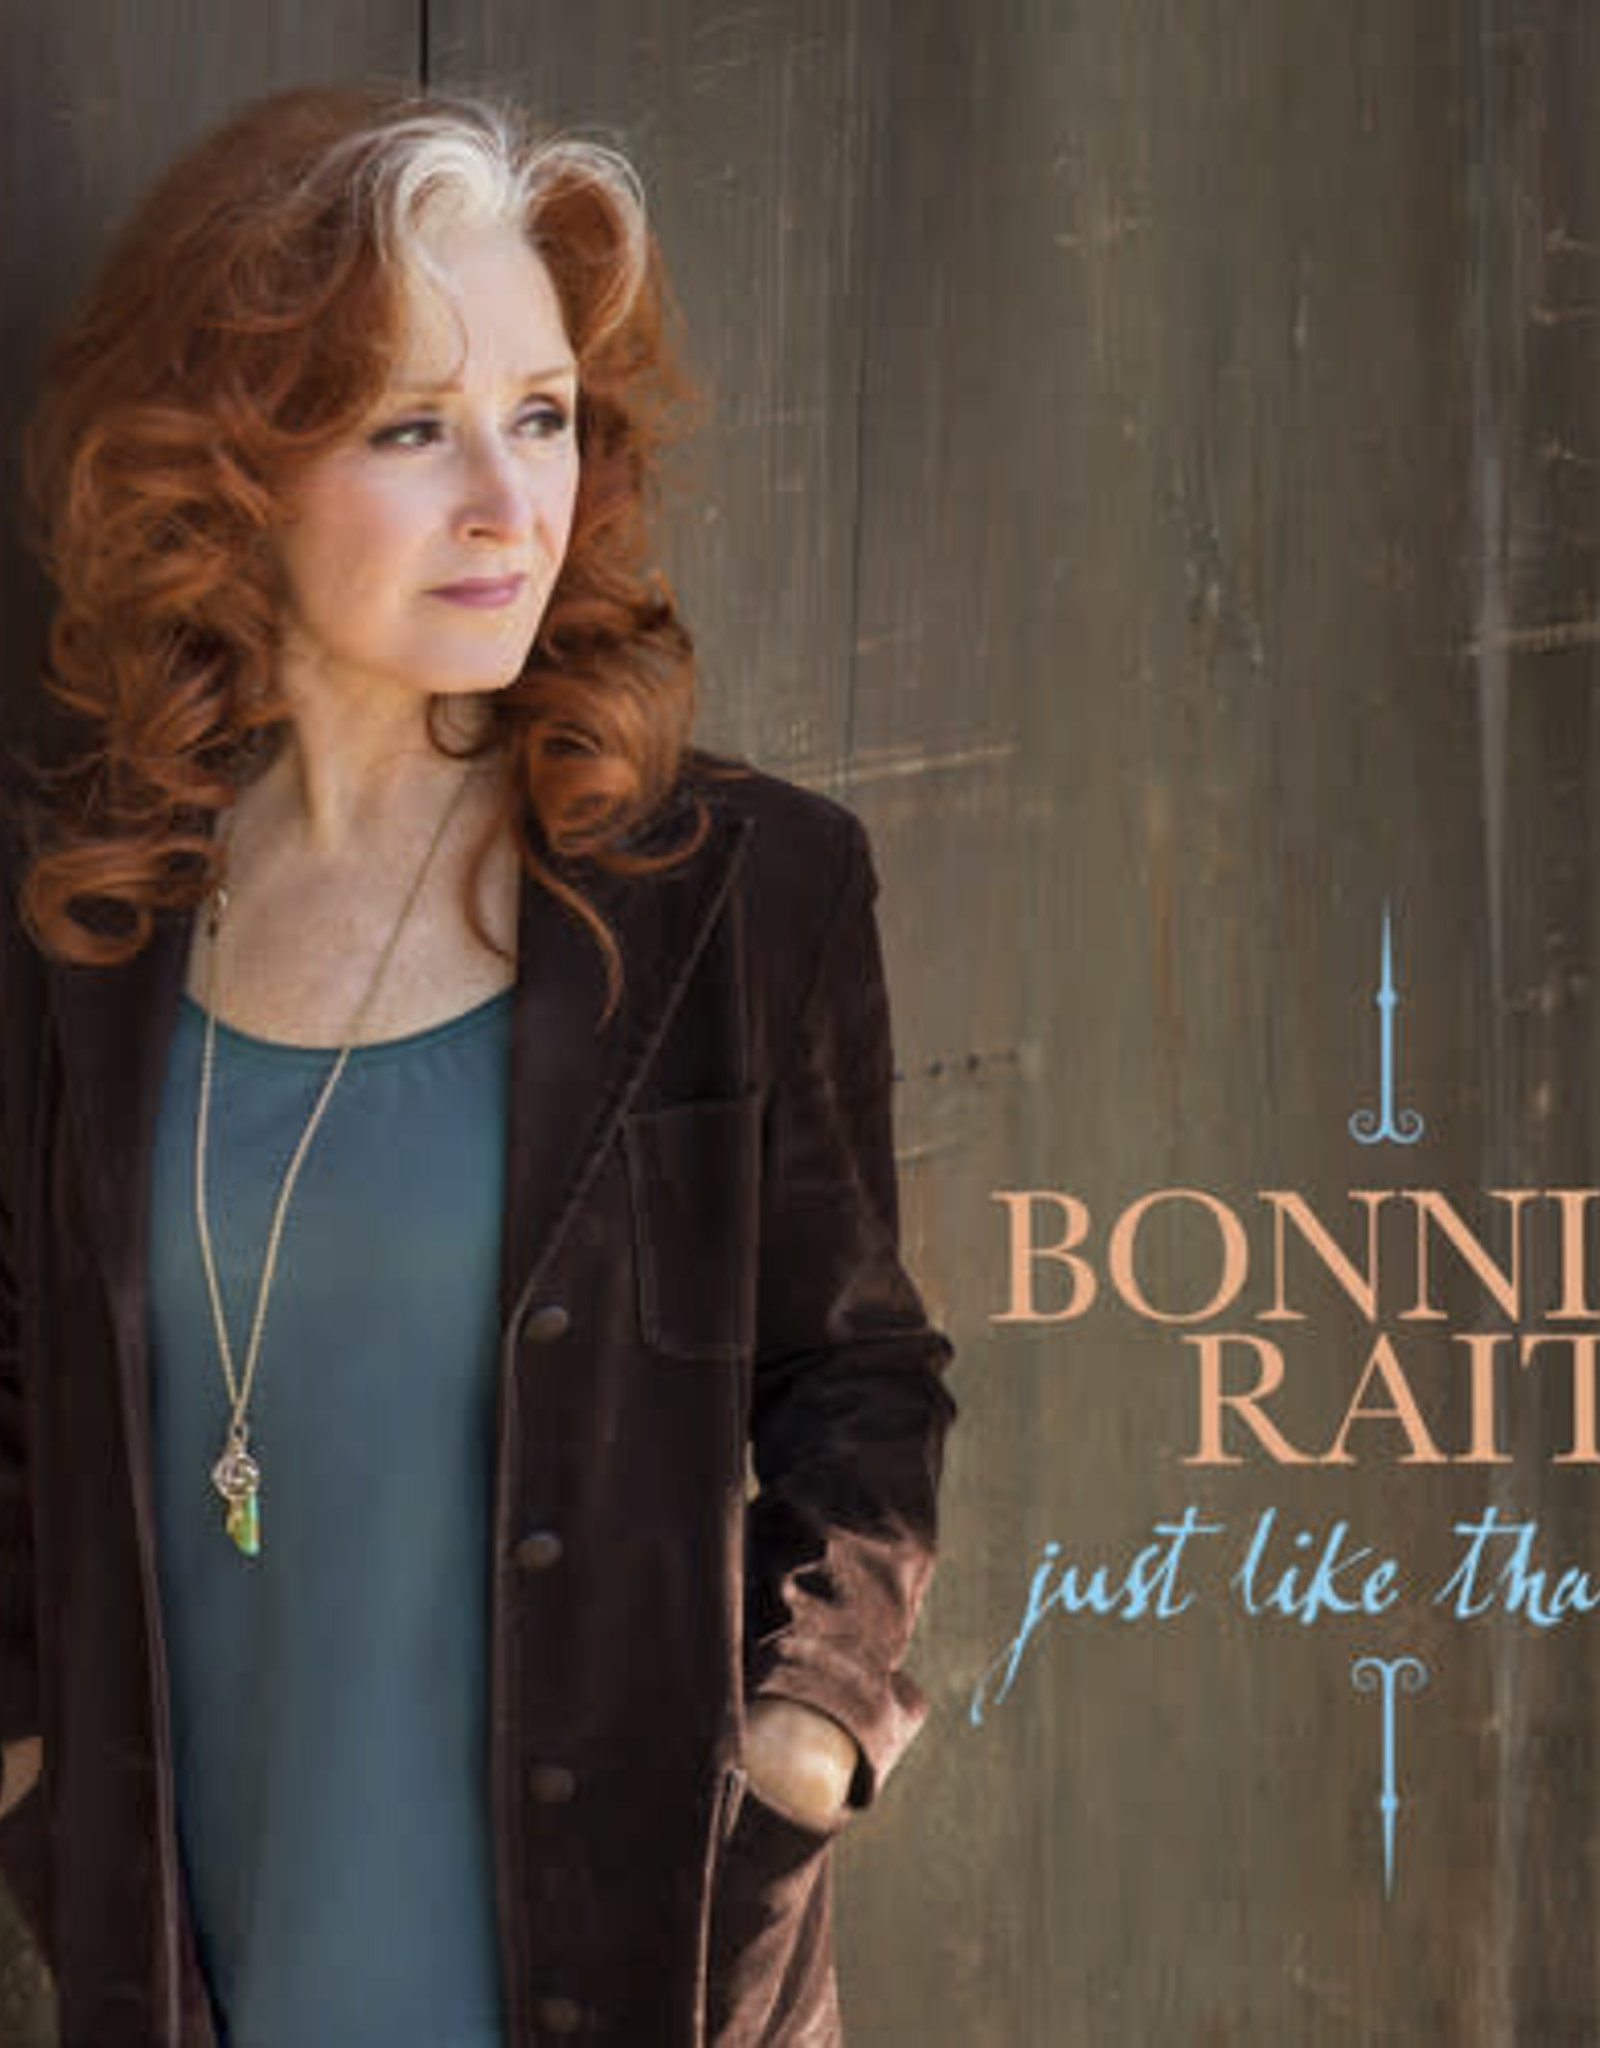 Bonnie Raitt - Just Like That...